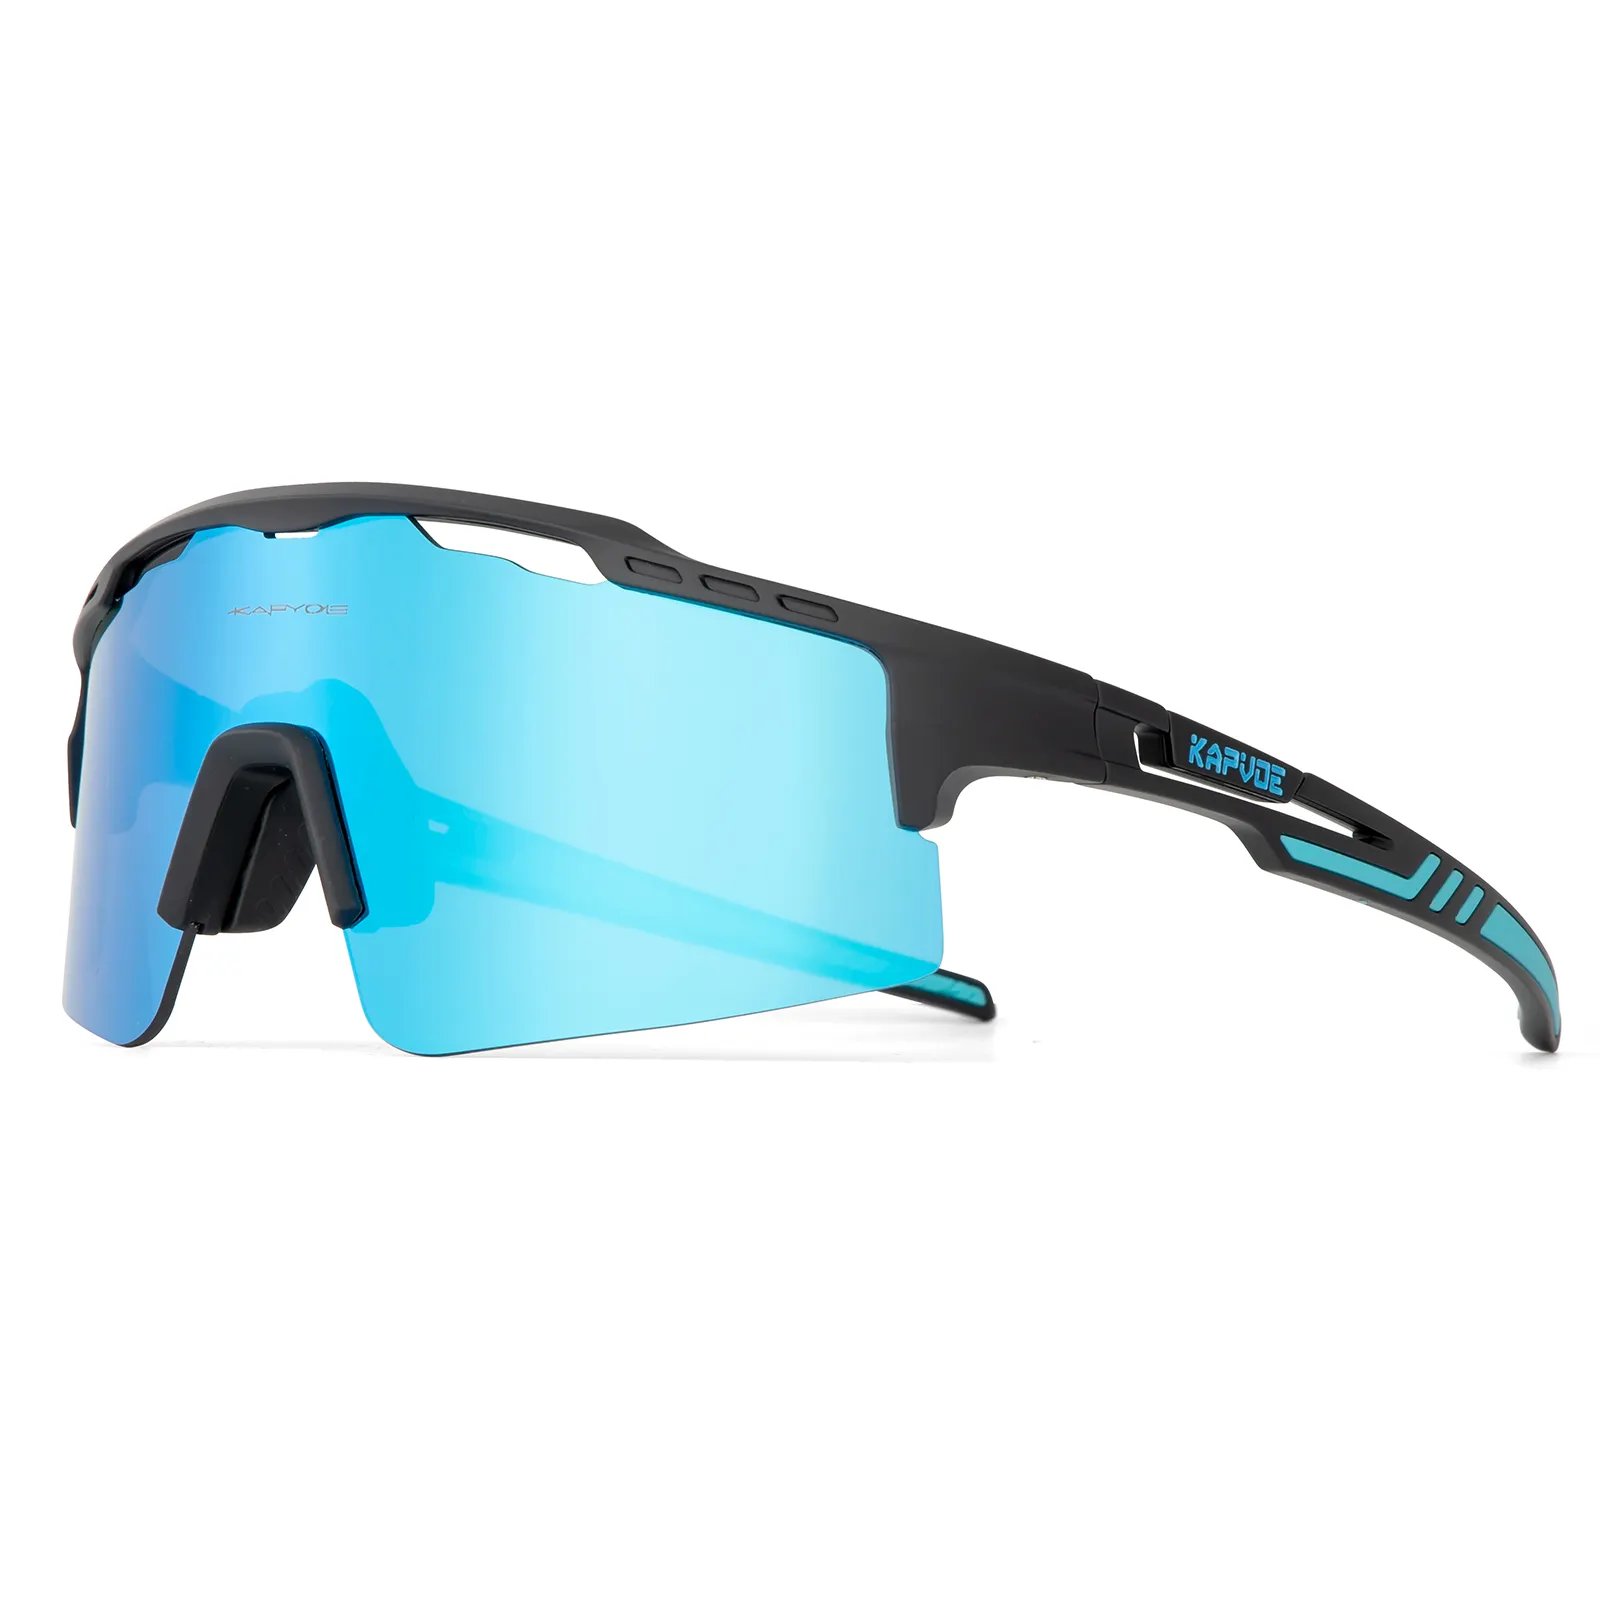 Newest Fashion Outdoor Sport Bike Sunglasses, TR90 UV400 Protect Riding Sport Eyewear Bike Glasses 2 lenses for Riding